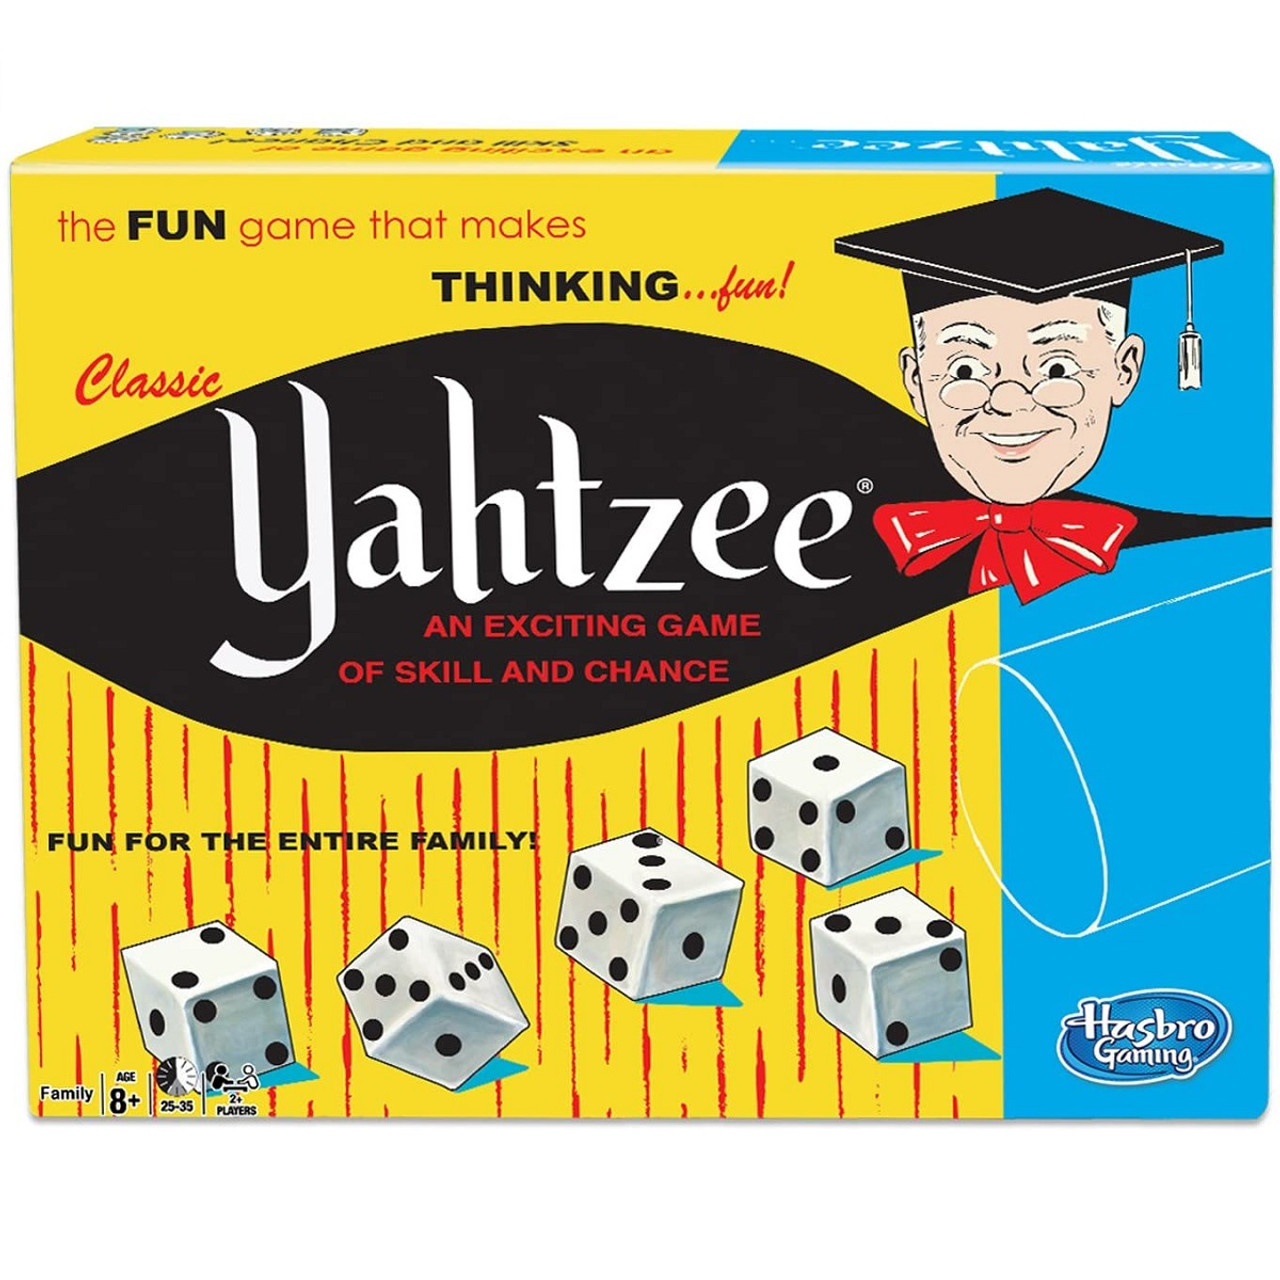 Disney Stitch Yahtzee Game 